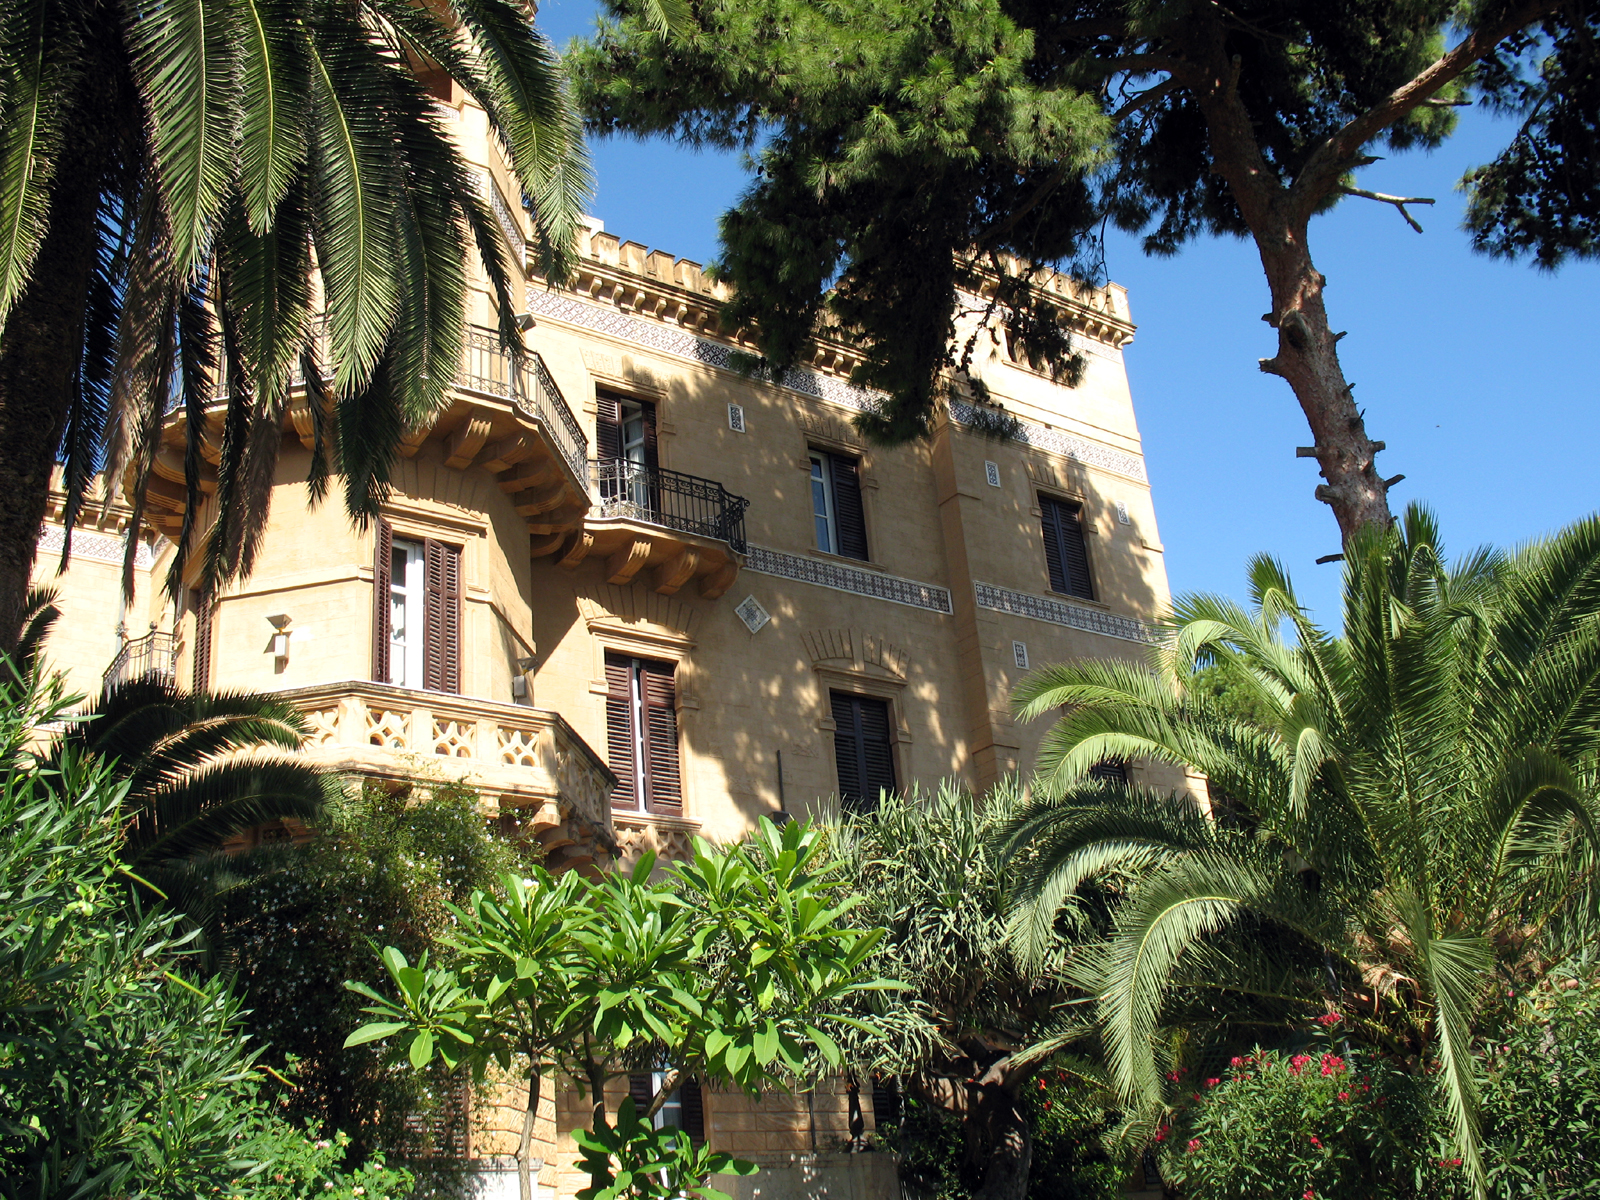 Villa Igiea - Luoghi - Italian Botanical Heritage